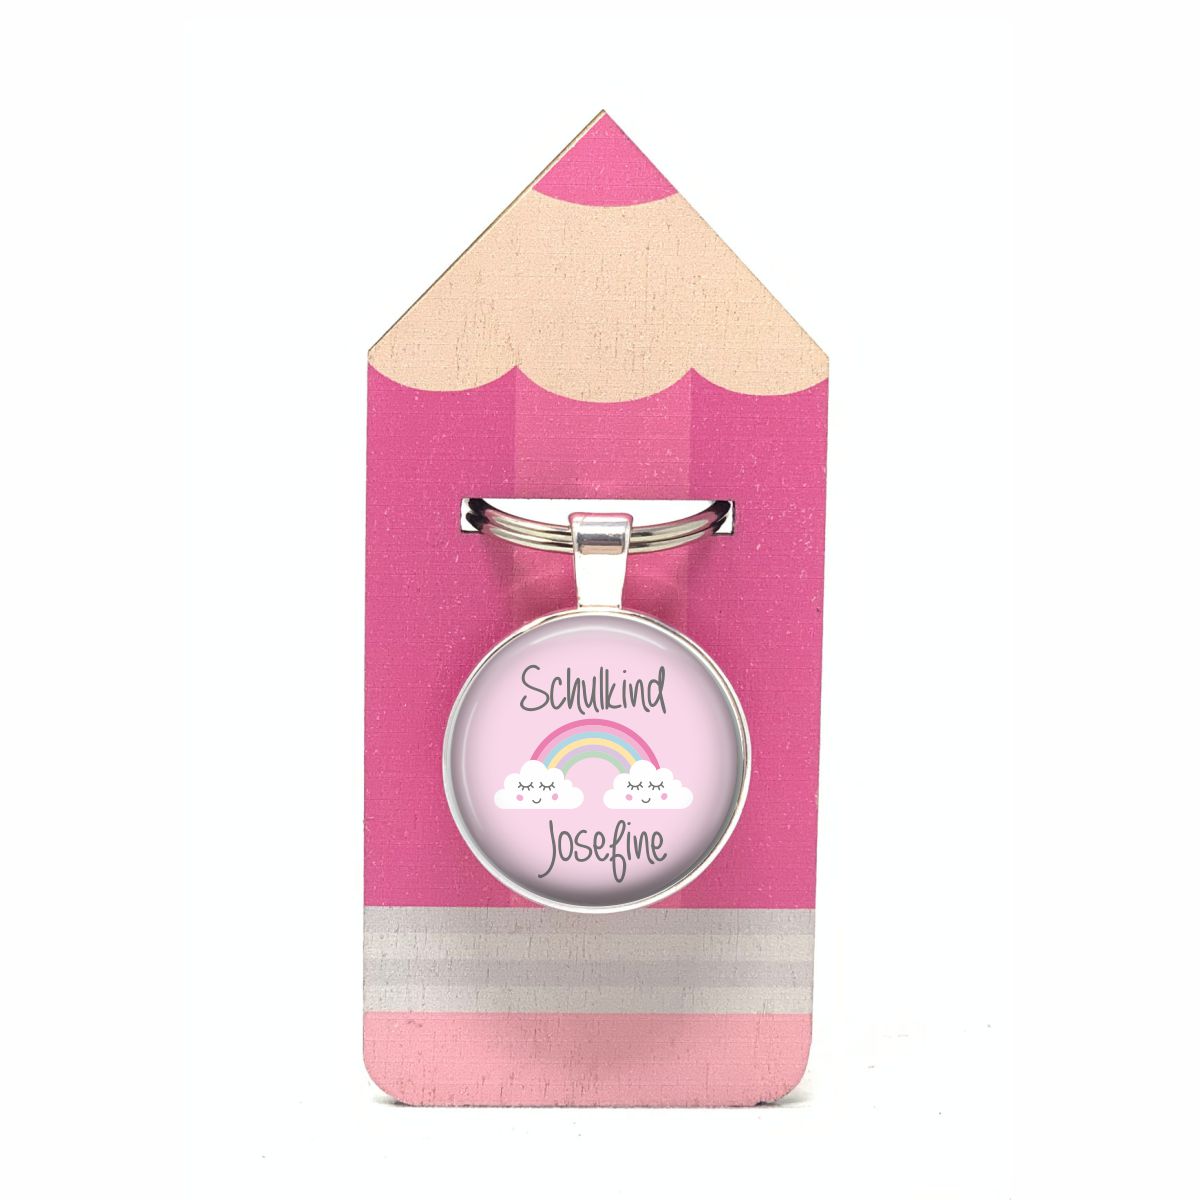 Schlüsselanhänger SCHULKIND Regenbogen rosa mit Wunschtext Holzkarte Stift